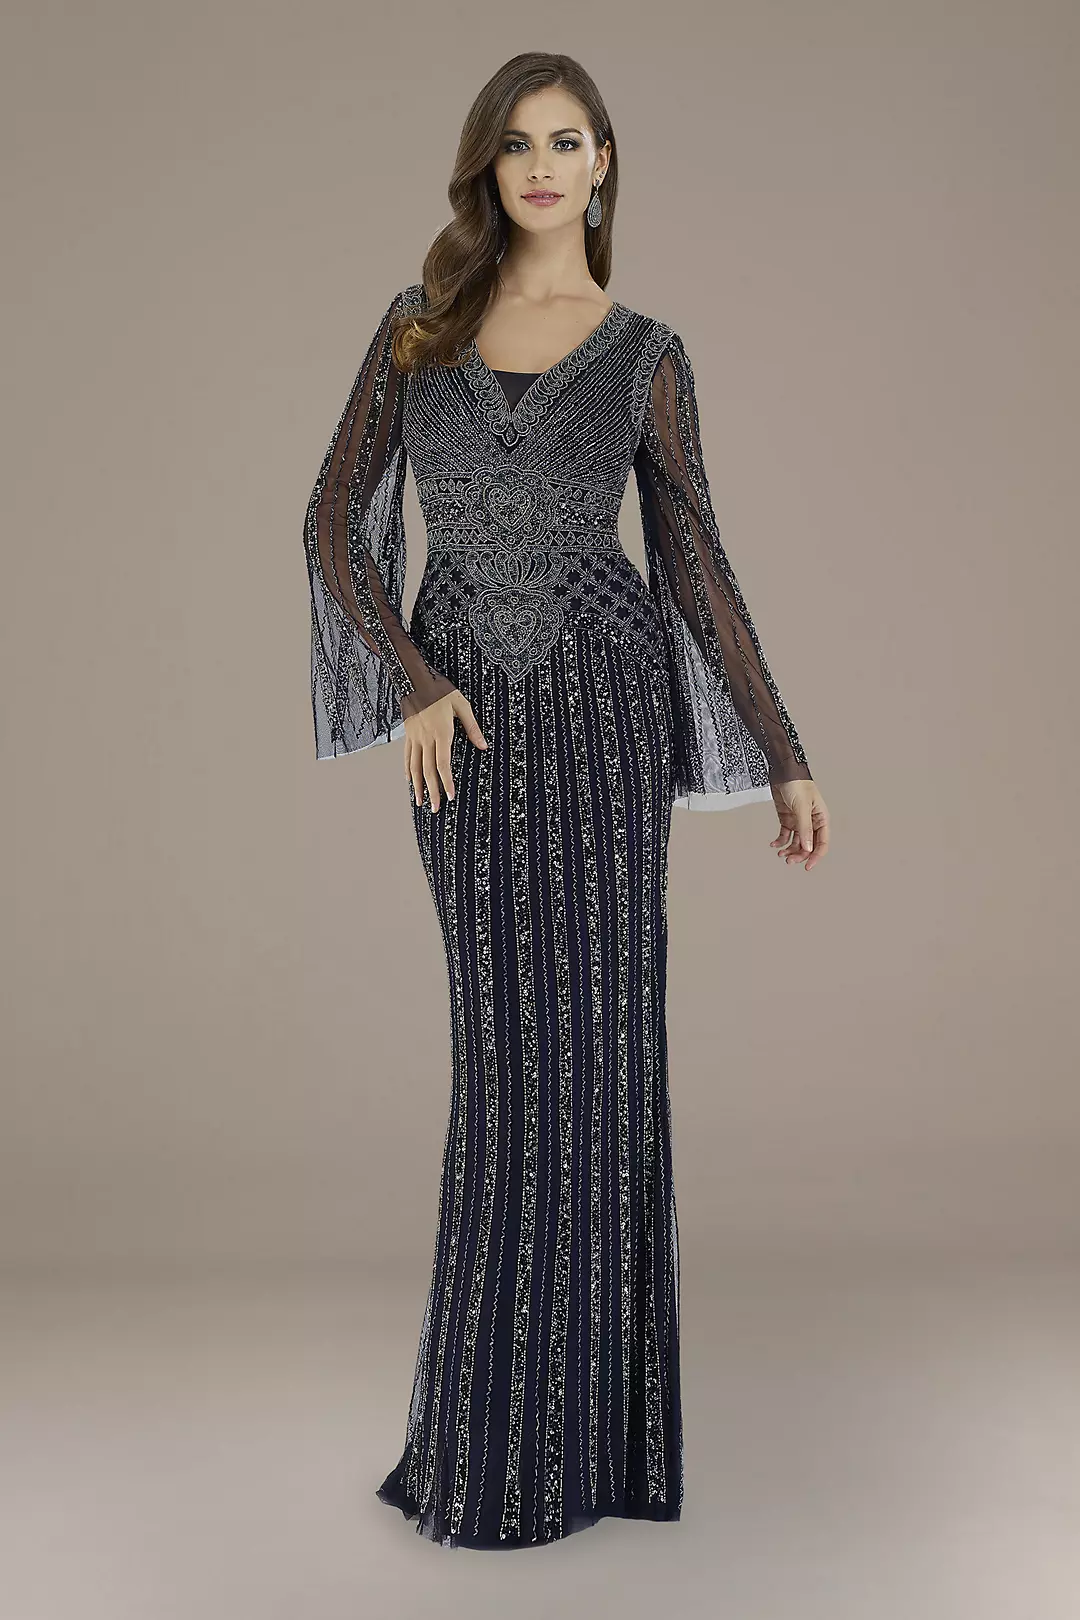 Lara Elizabeth Beaded Bell Sleeve V-Neck Gown Image